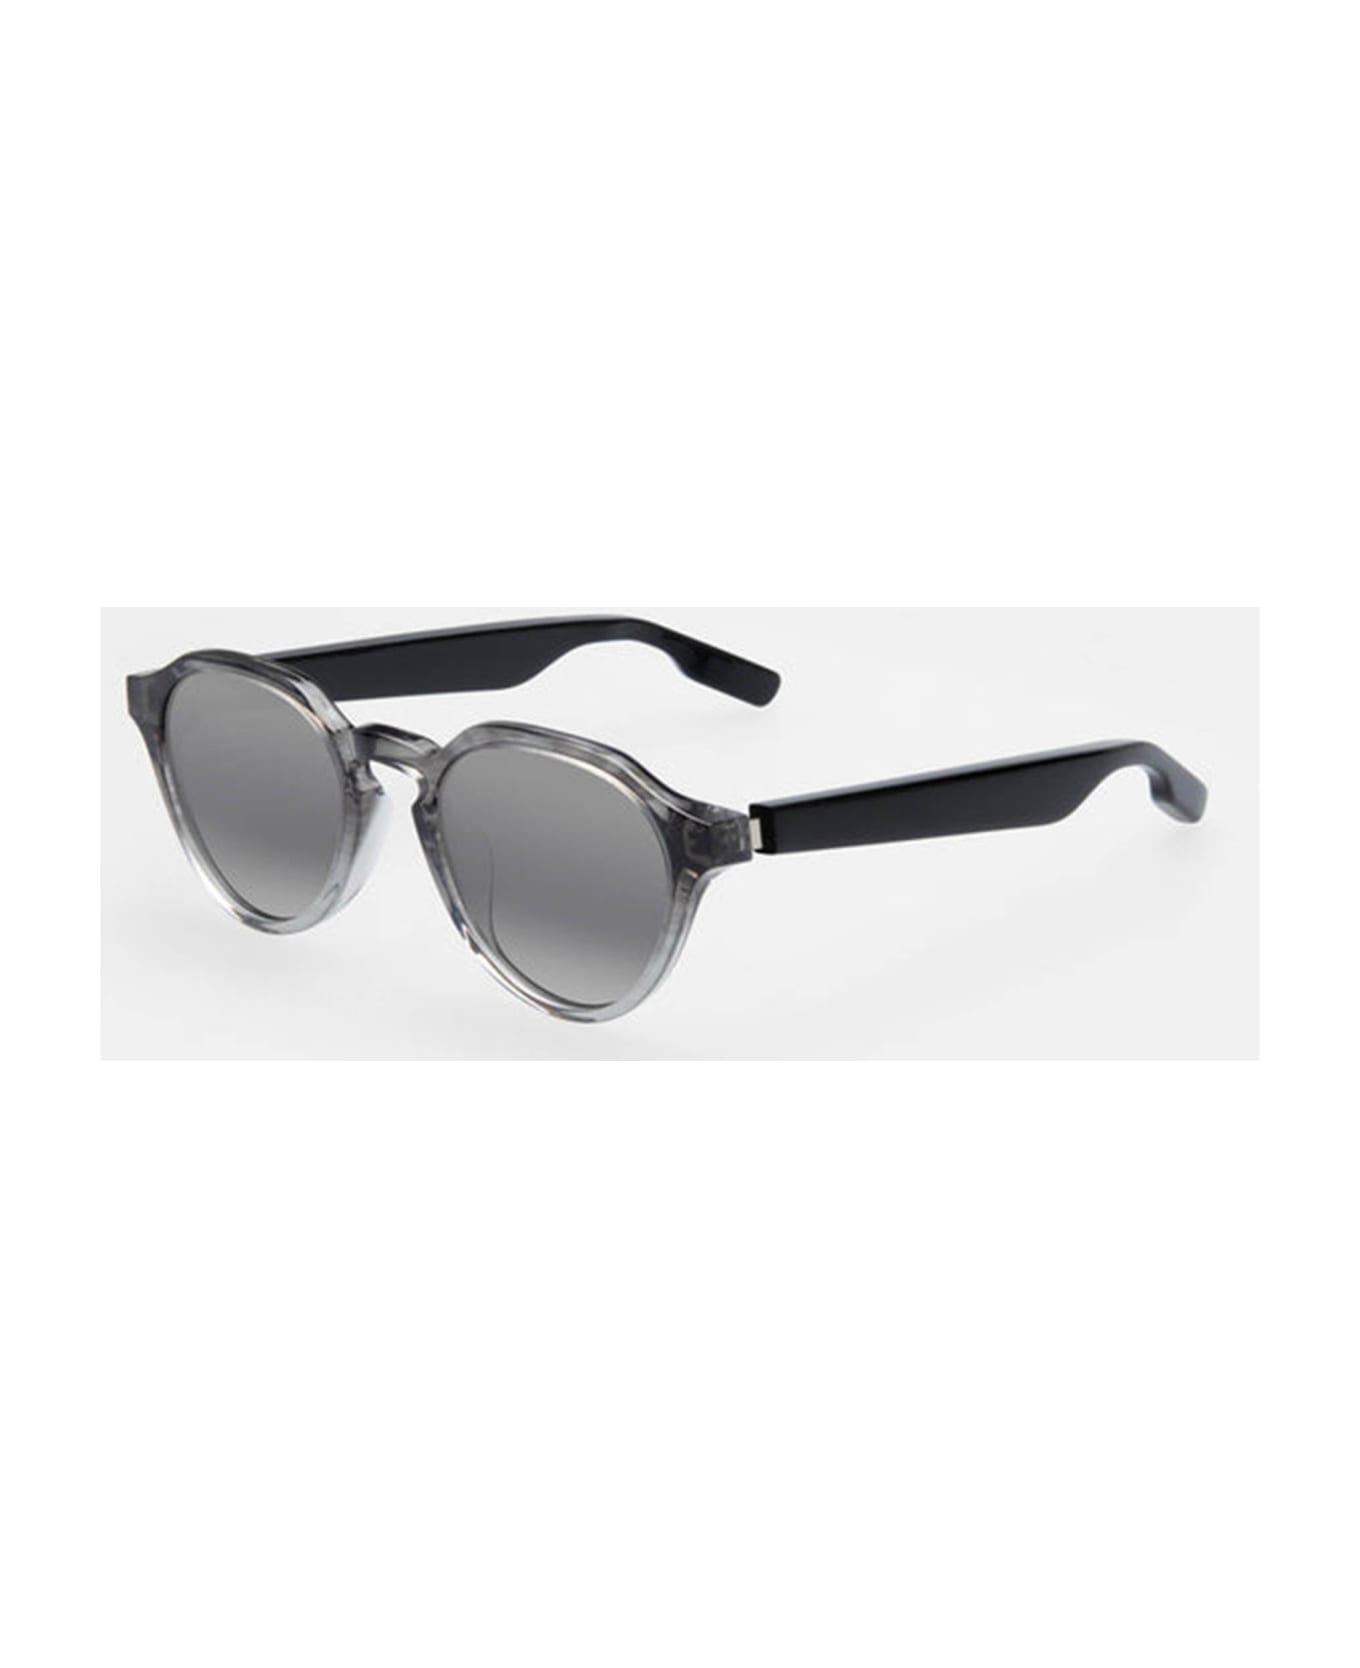 Aether Model R1 - Gradient Grey Sunglasses - grey